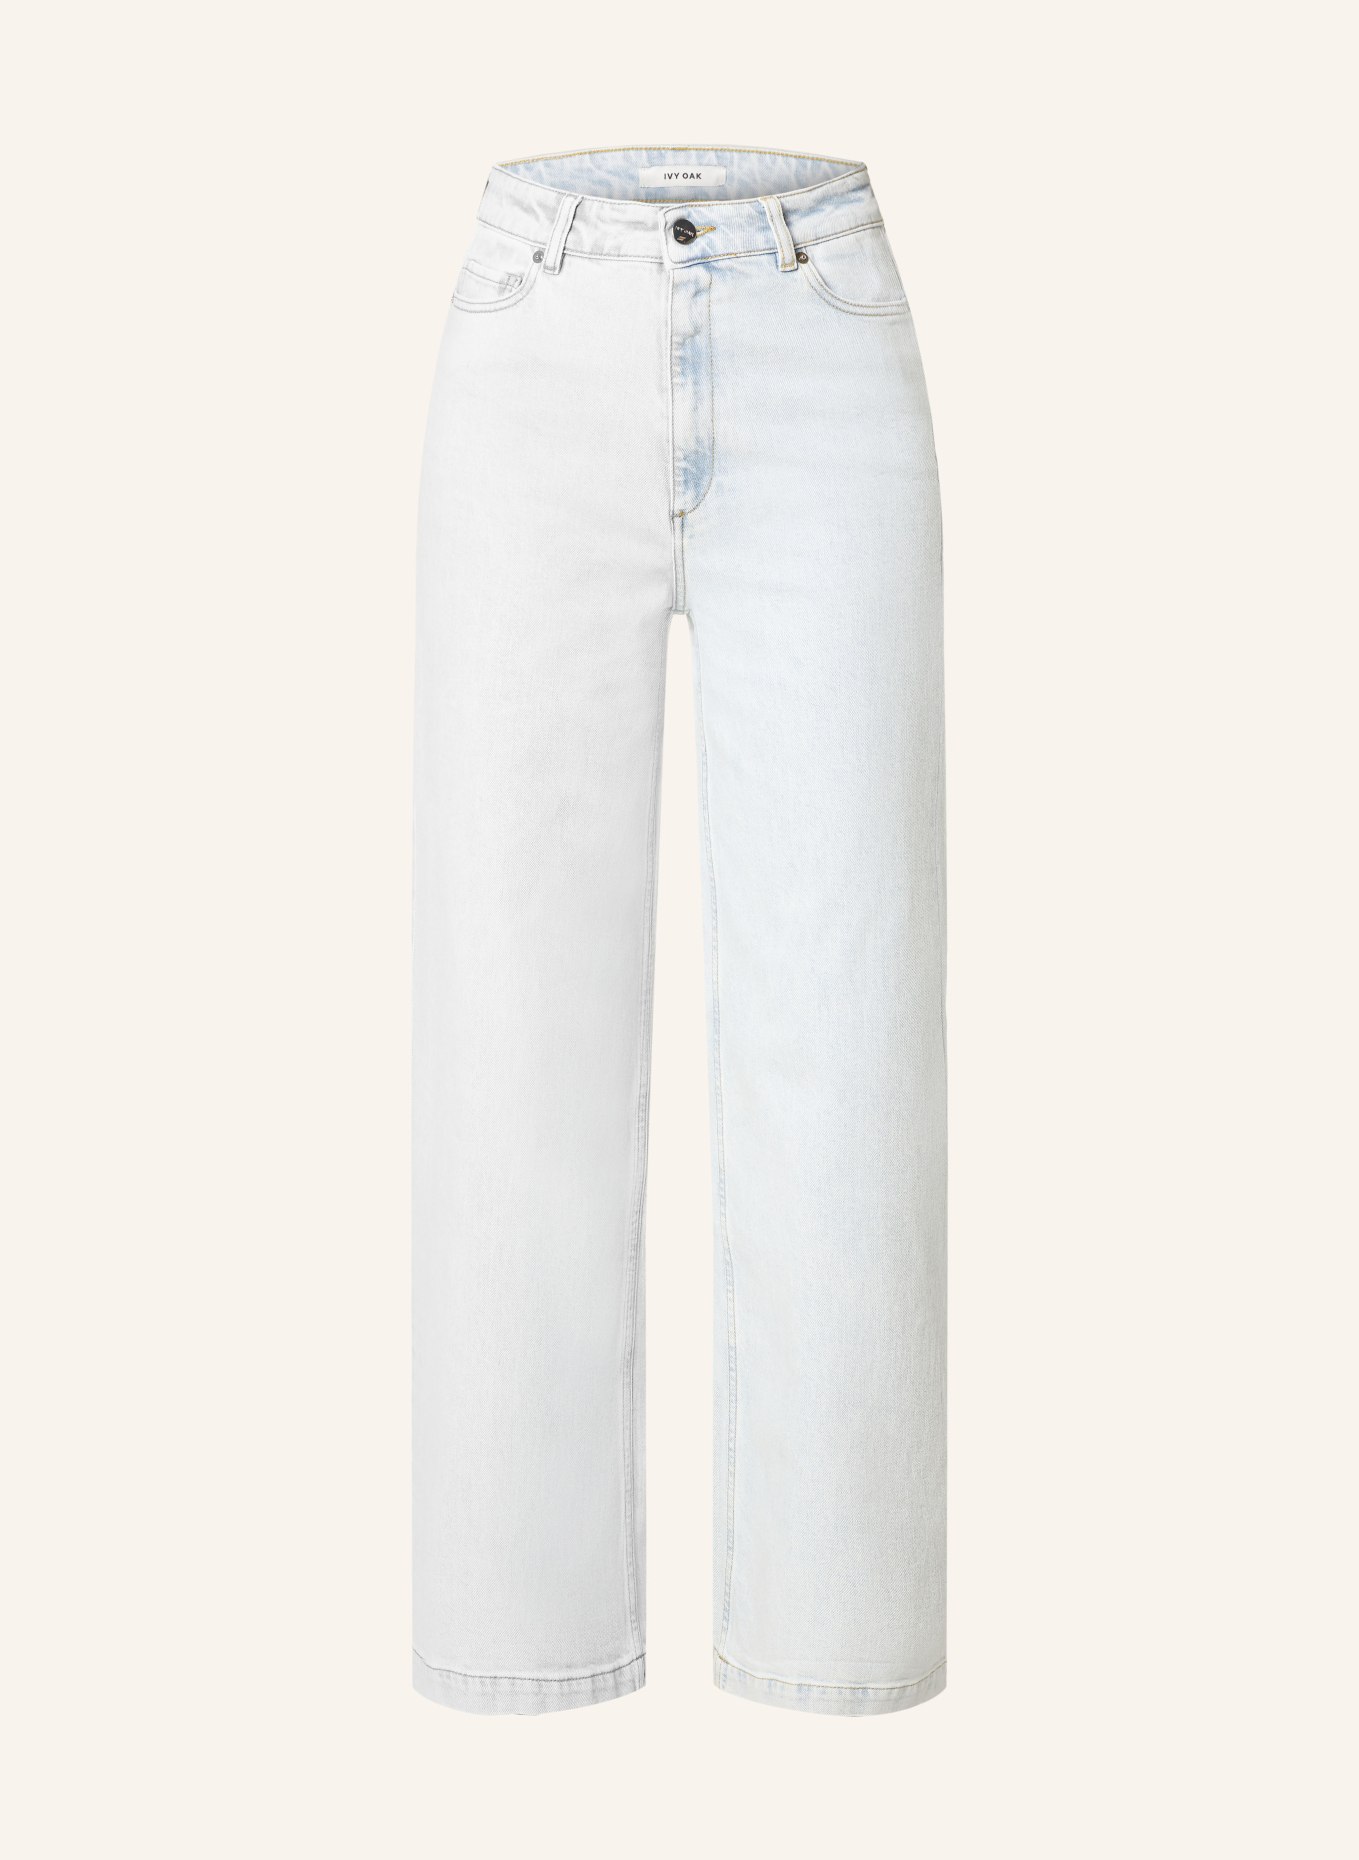 IVY OAK Straight Jeans PIXIE, Farbe: BL806  Washed Light Blue (Bild 1)